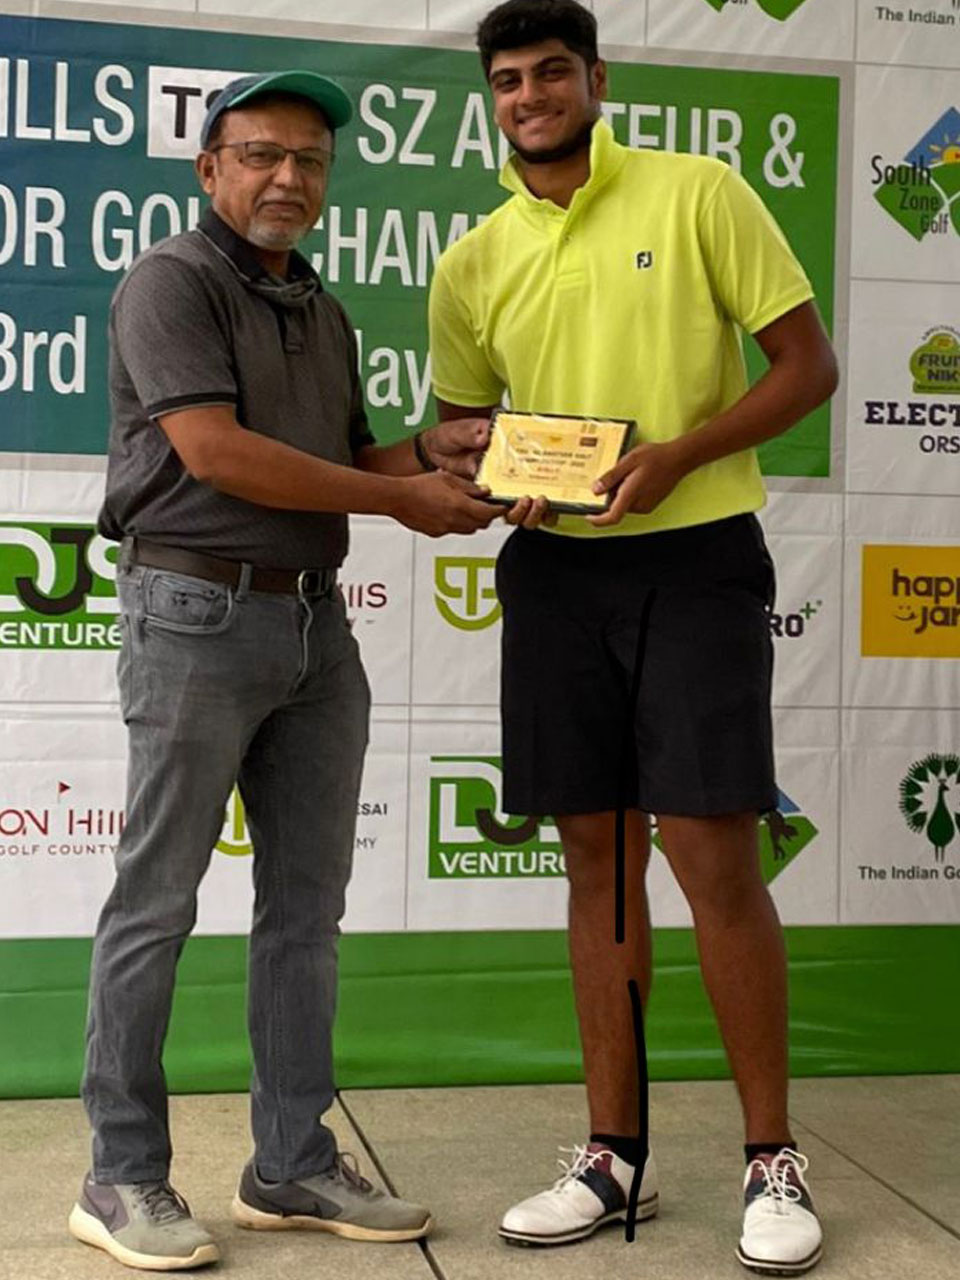 Varun Muthappa wins the Zion Hills TSG South Zone Junior Golf Championship